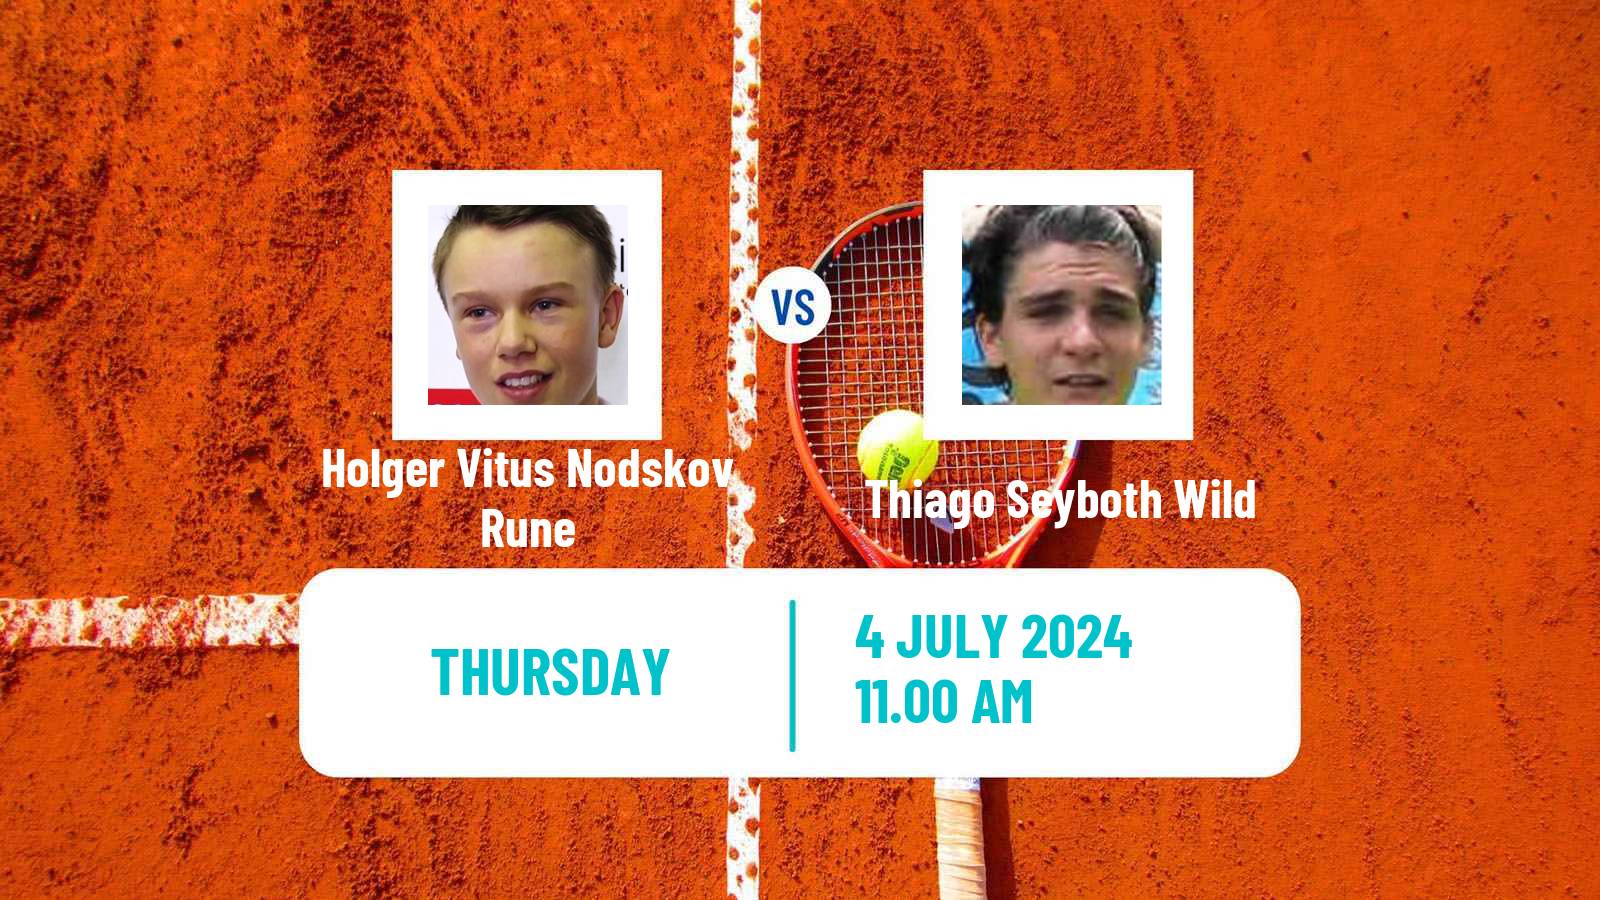 Tennis ATP Wimbledon Holger Vitus Nodskov Rune - Thiago Seyboth Wild